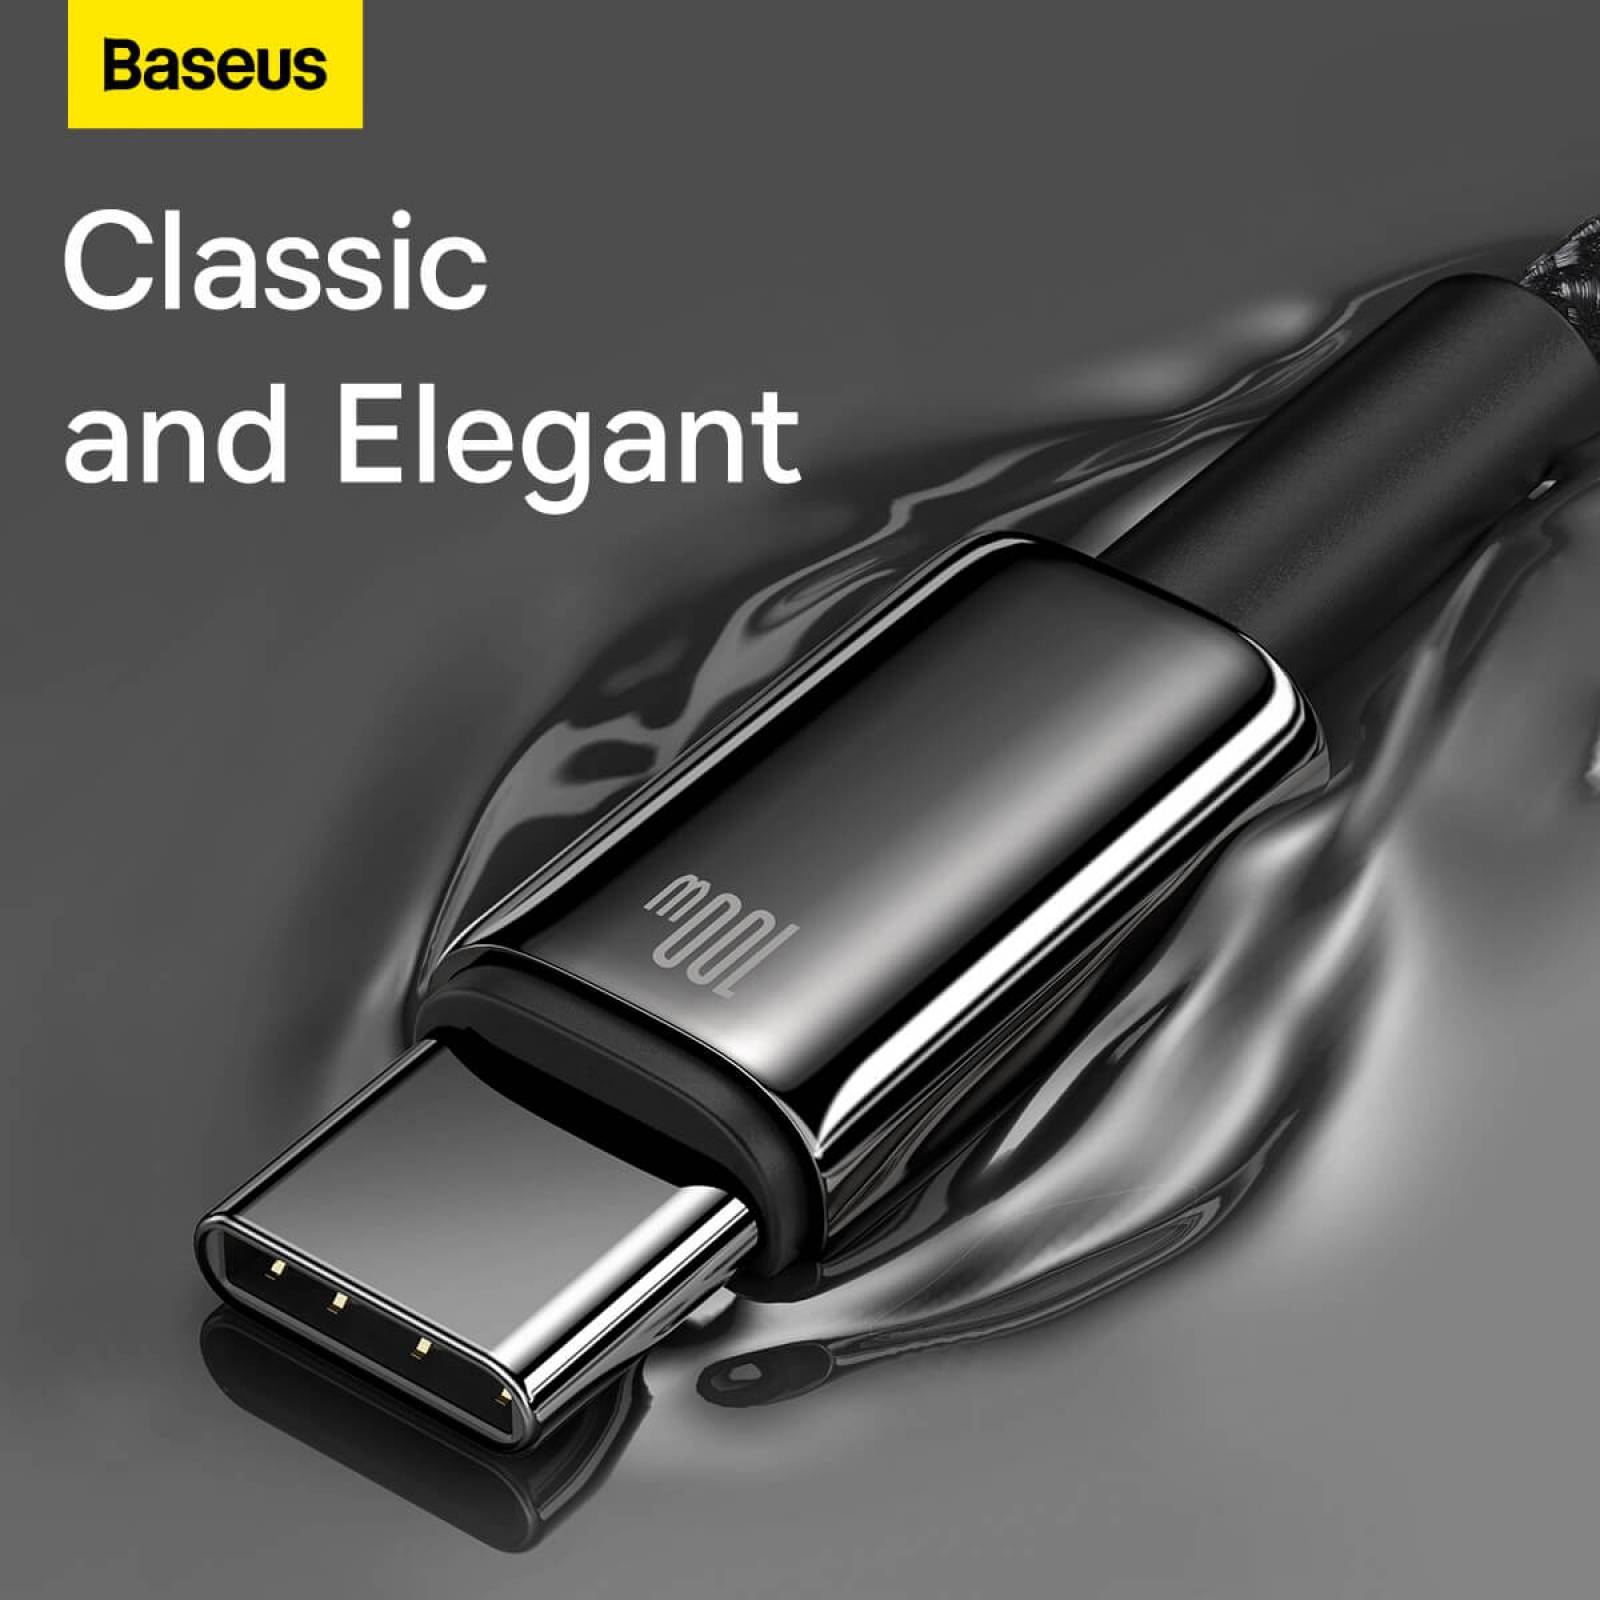 Cable USB a Tipo C Baseus Tungsten Carga Rápida 40w/66w 2m Negro